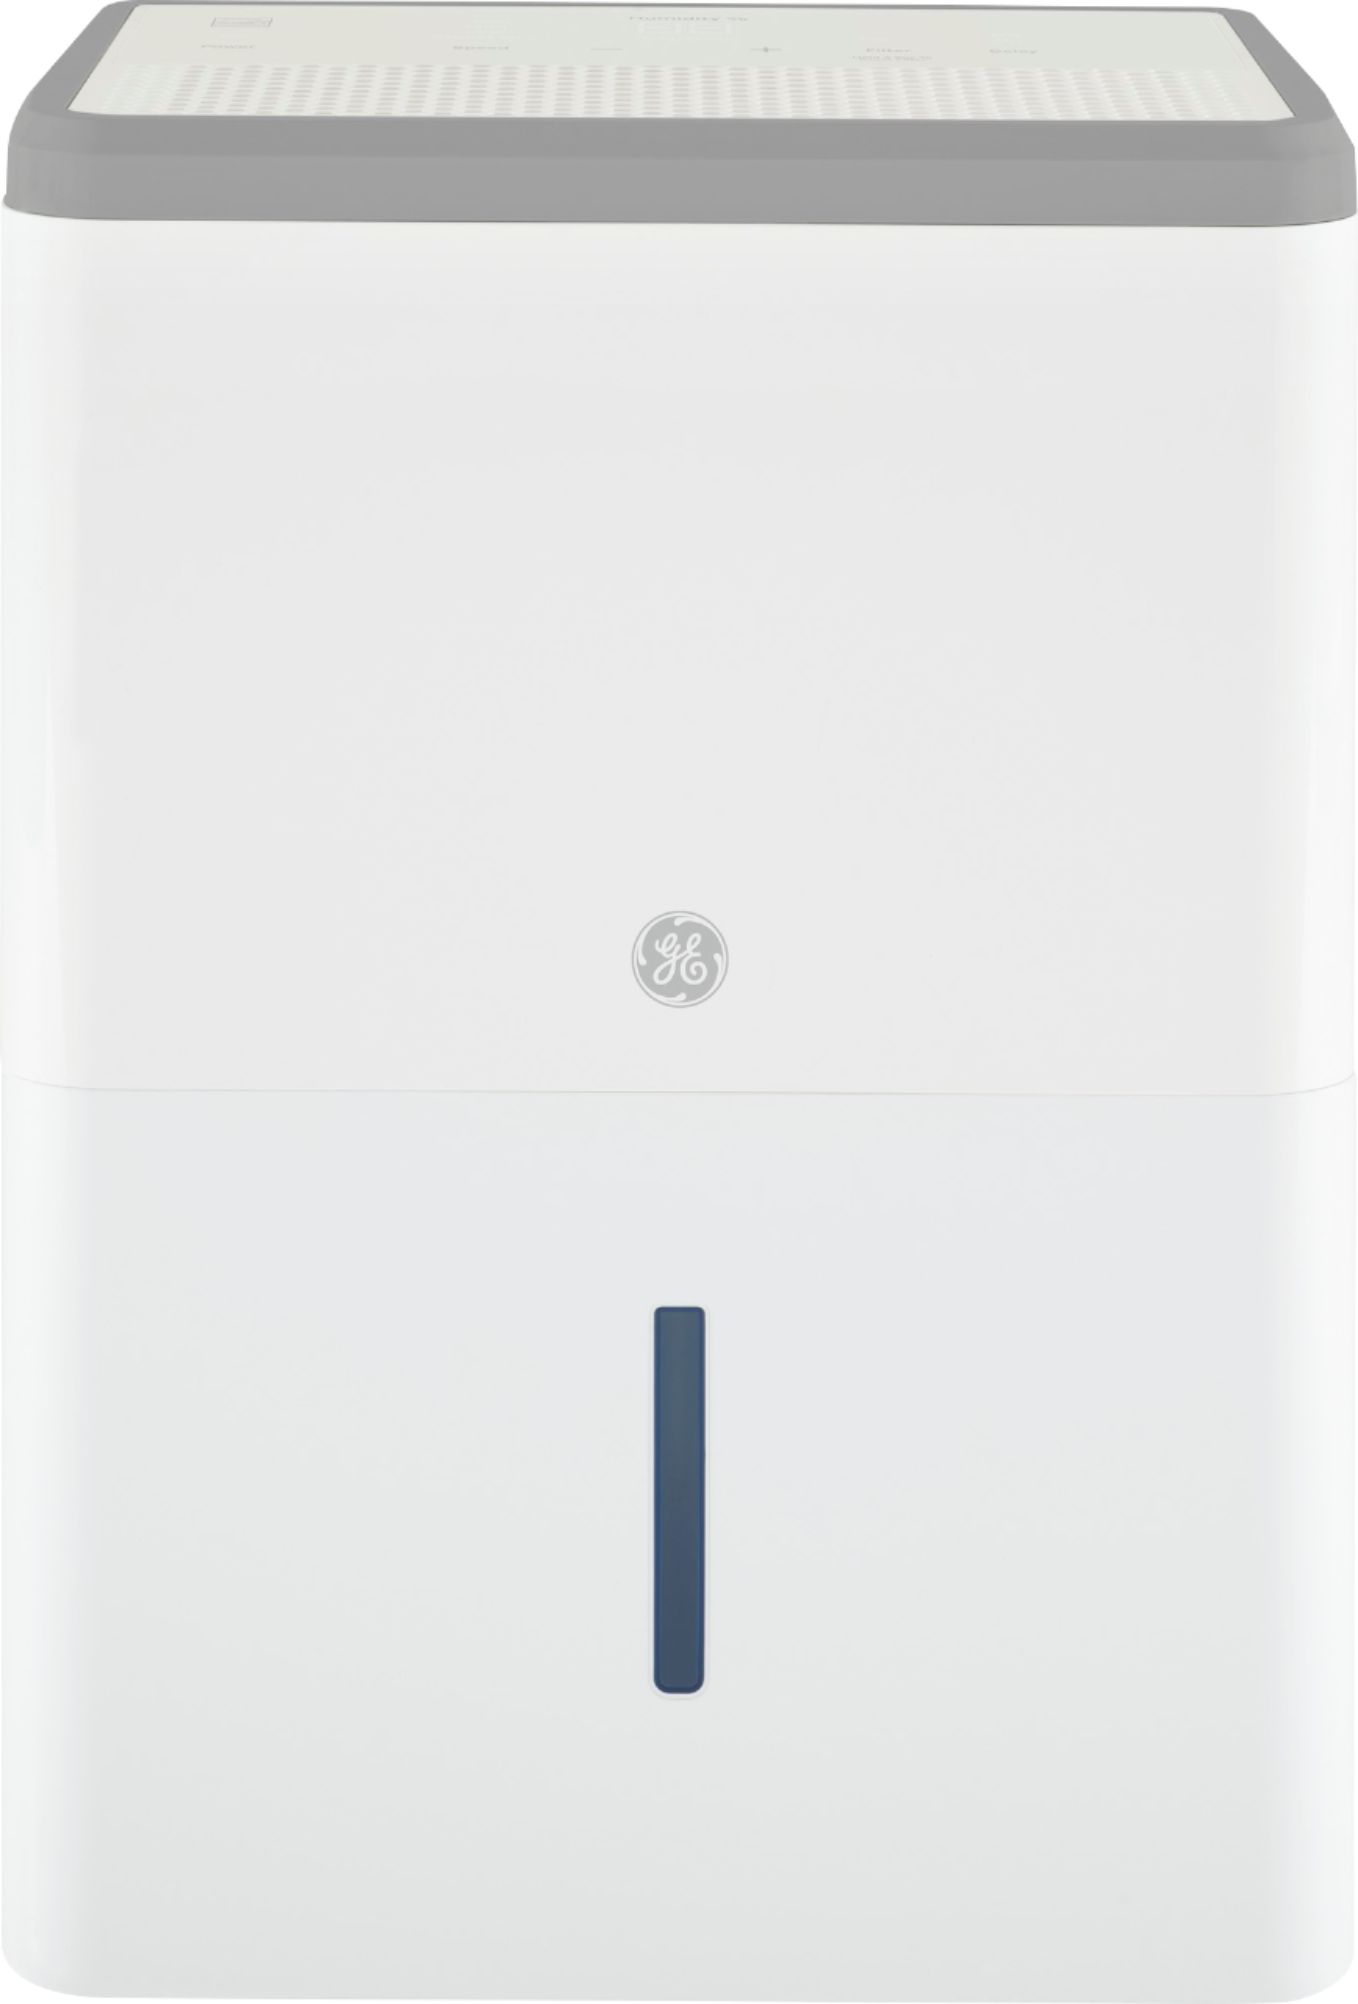 GE - 35-Pint Portable Dehumidifier - White